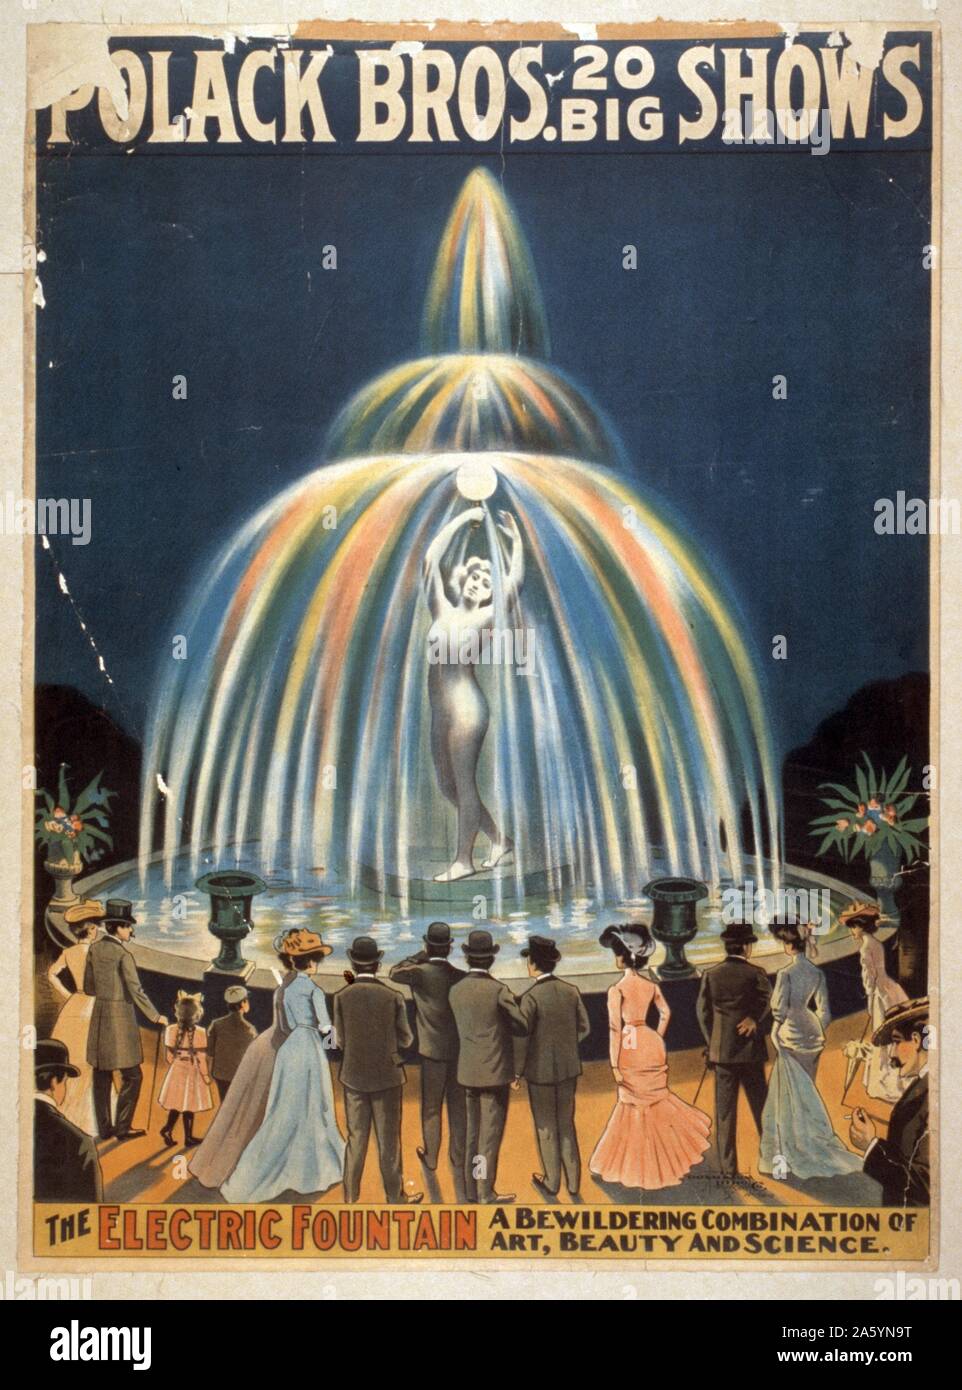 Kiskunfélegyháza Brothers 20 grands spectacles. affiche, lithographie, circa 1900-1905 Banque D'Images